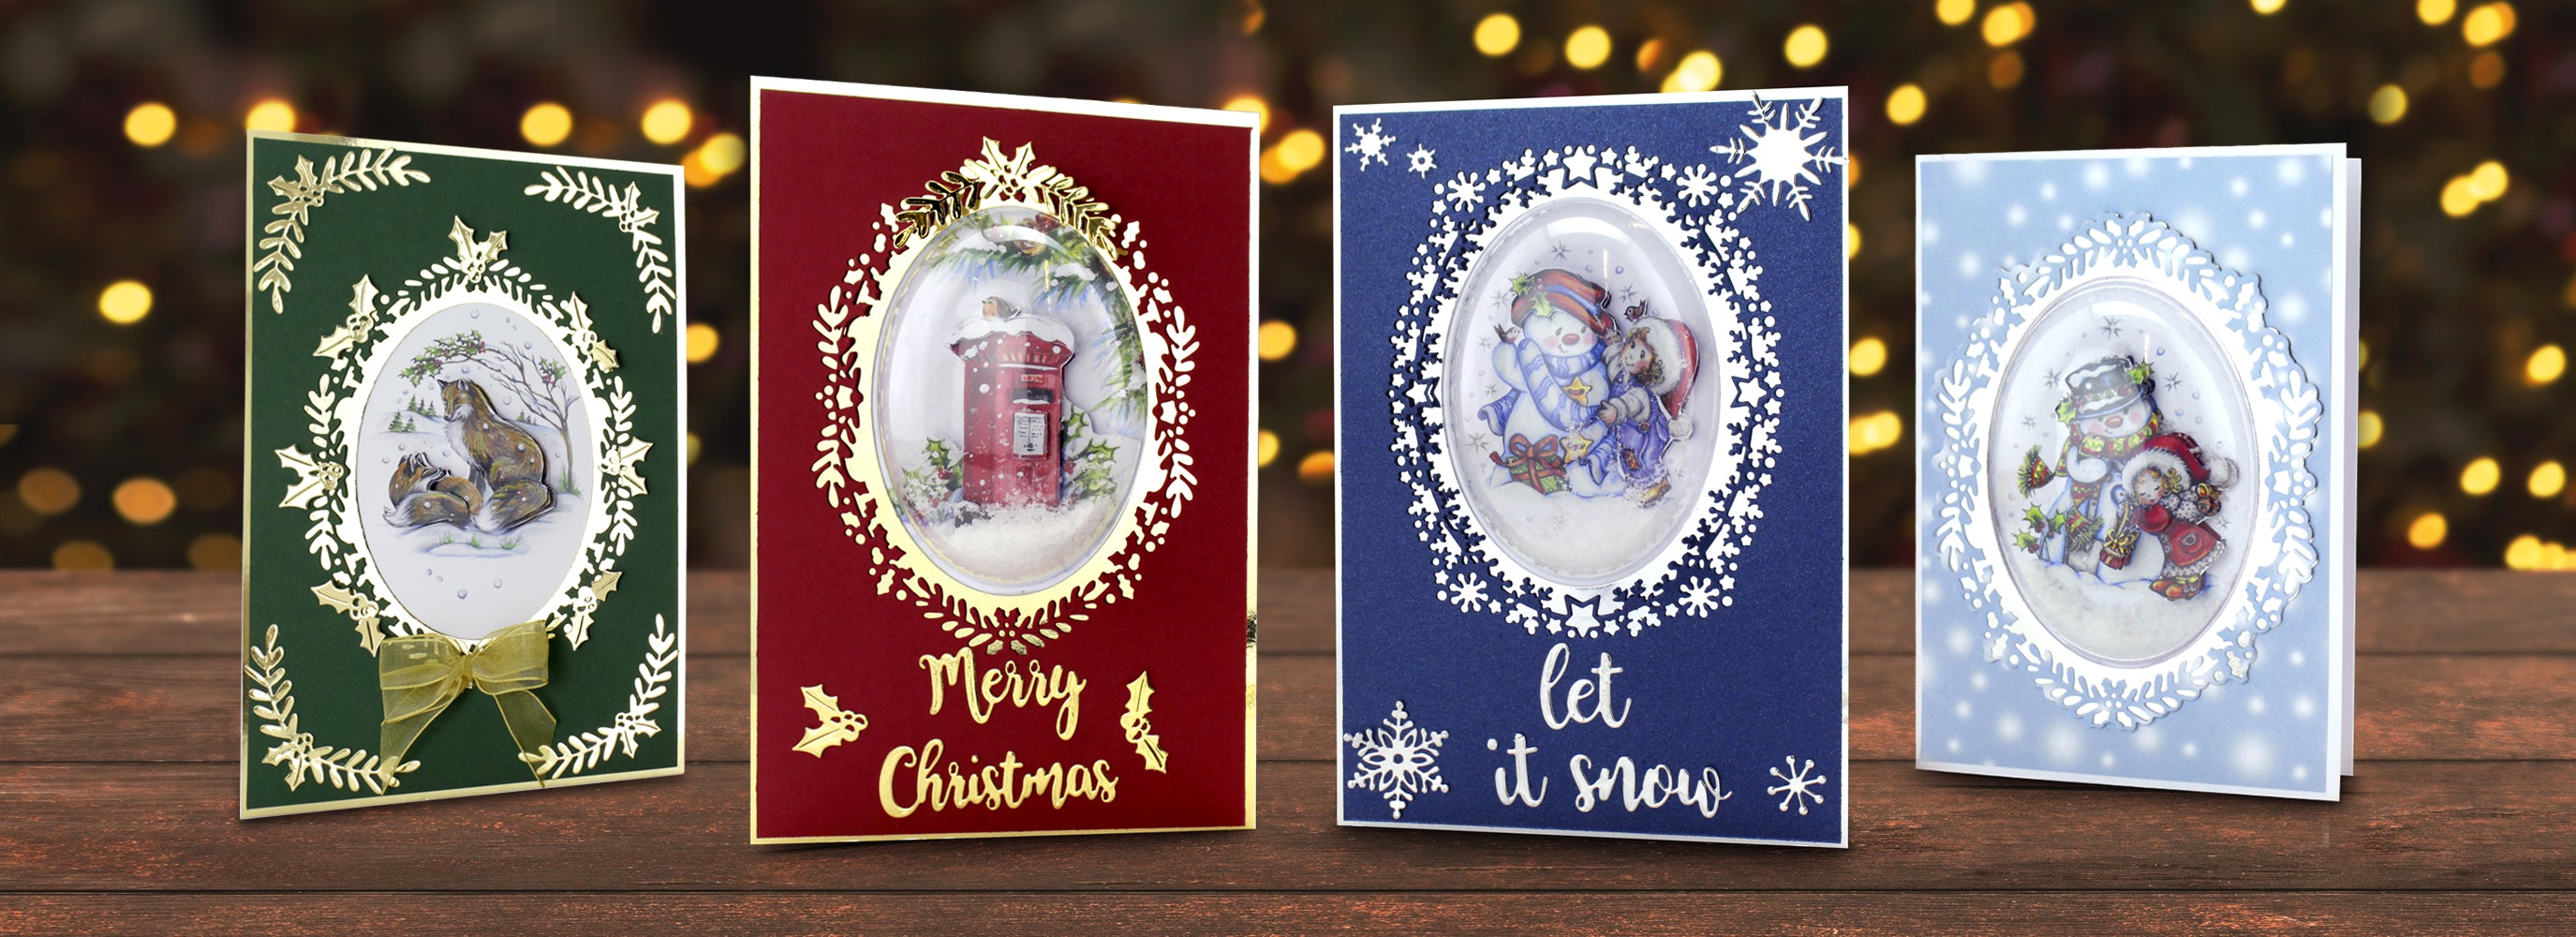 Make your own Snow Globe Christmas card